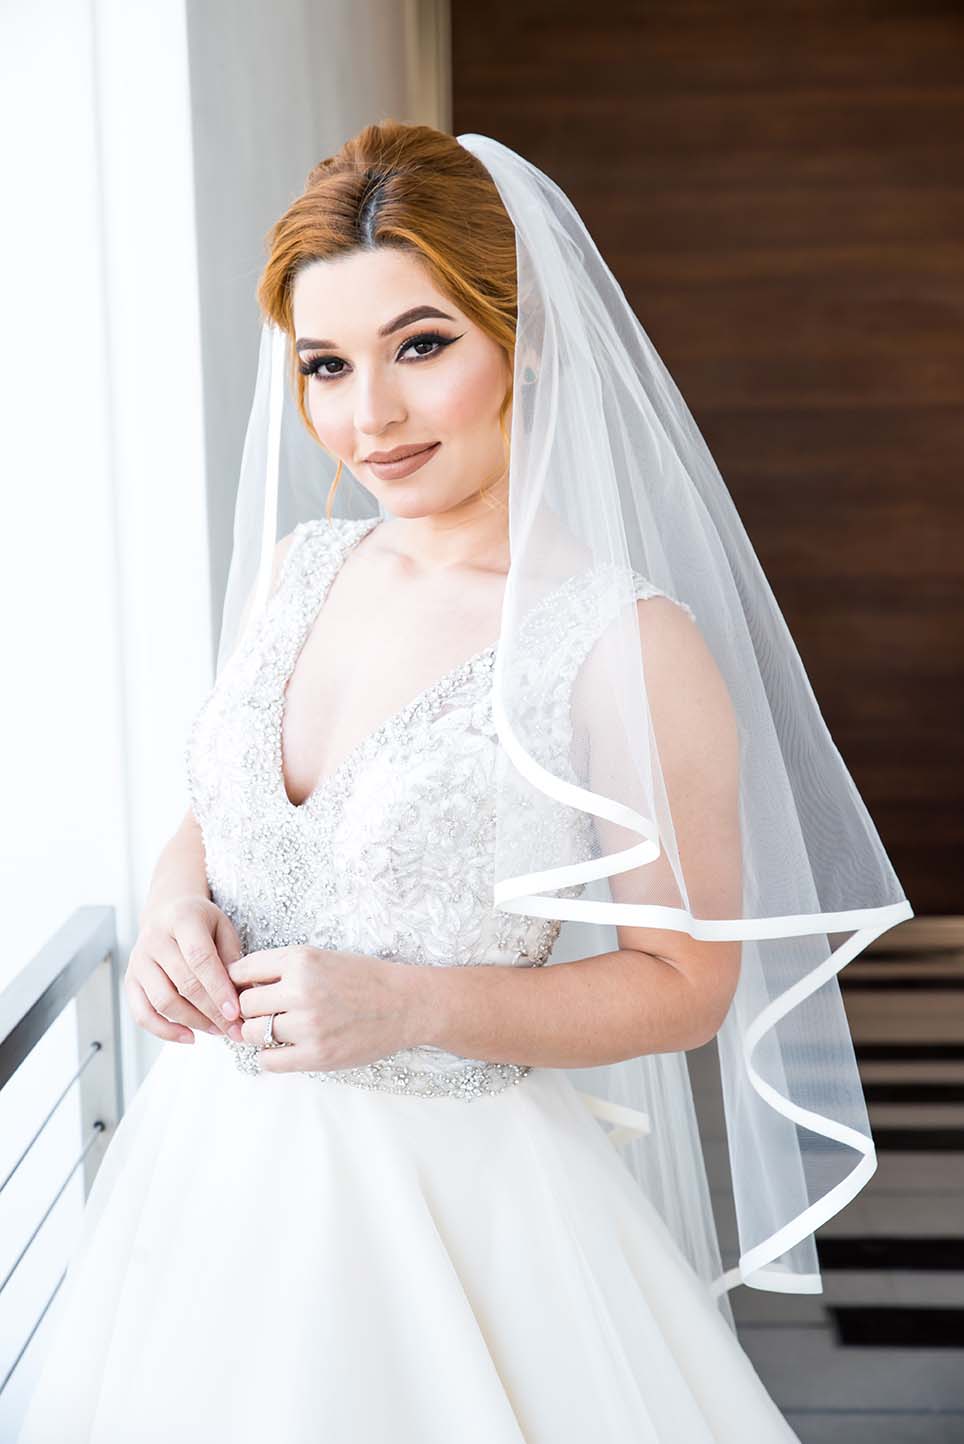 Model wearing white wedding dress and veil